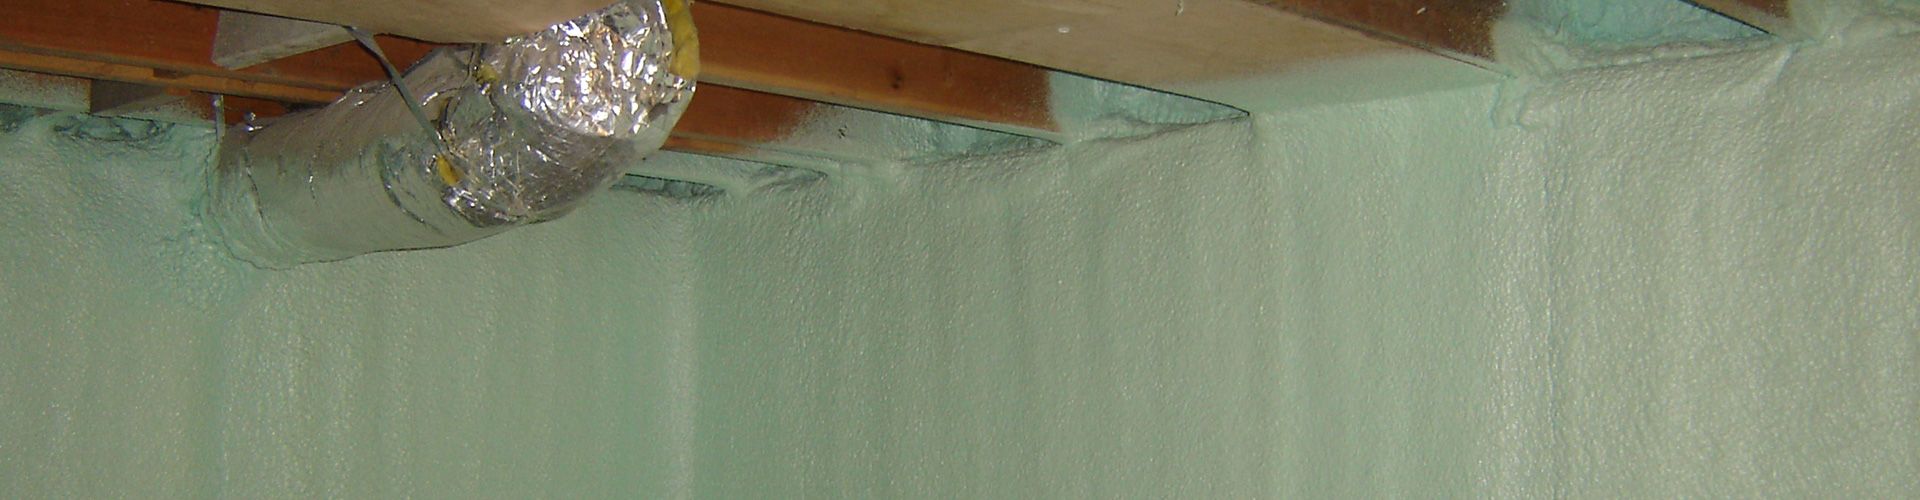 closed cell spray foam insulation in crawlspace